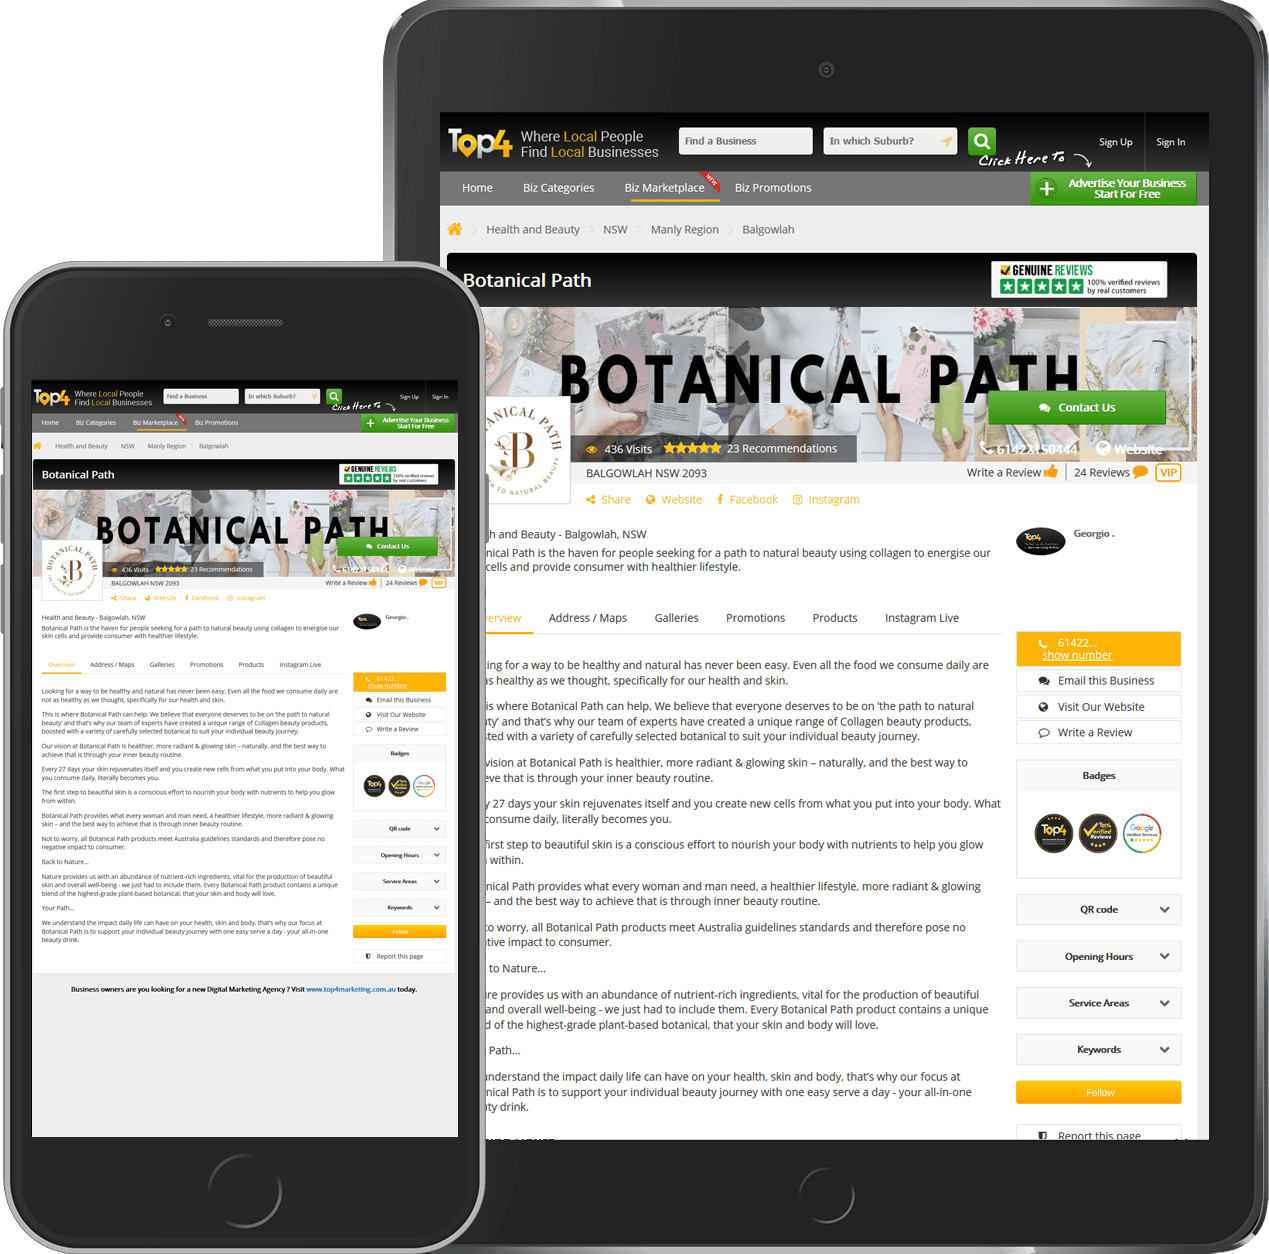 Botanical Path – Digital Marketing Case Study – Top4 Marketing